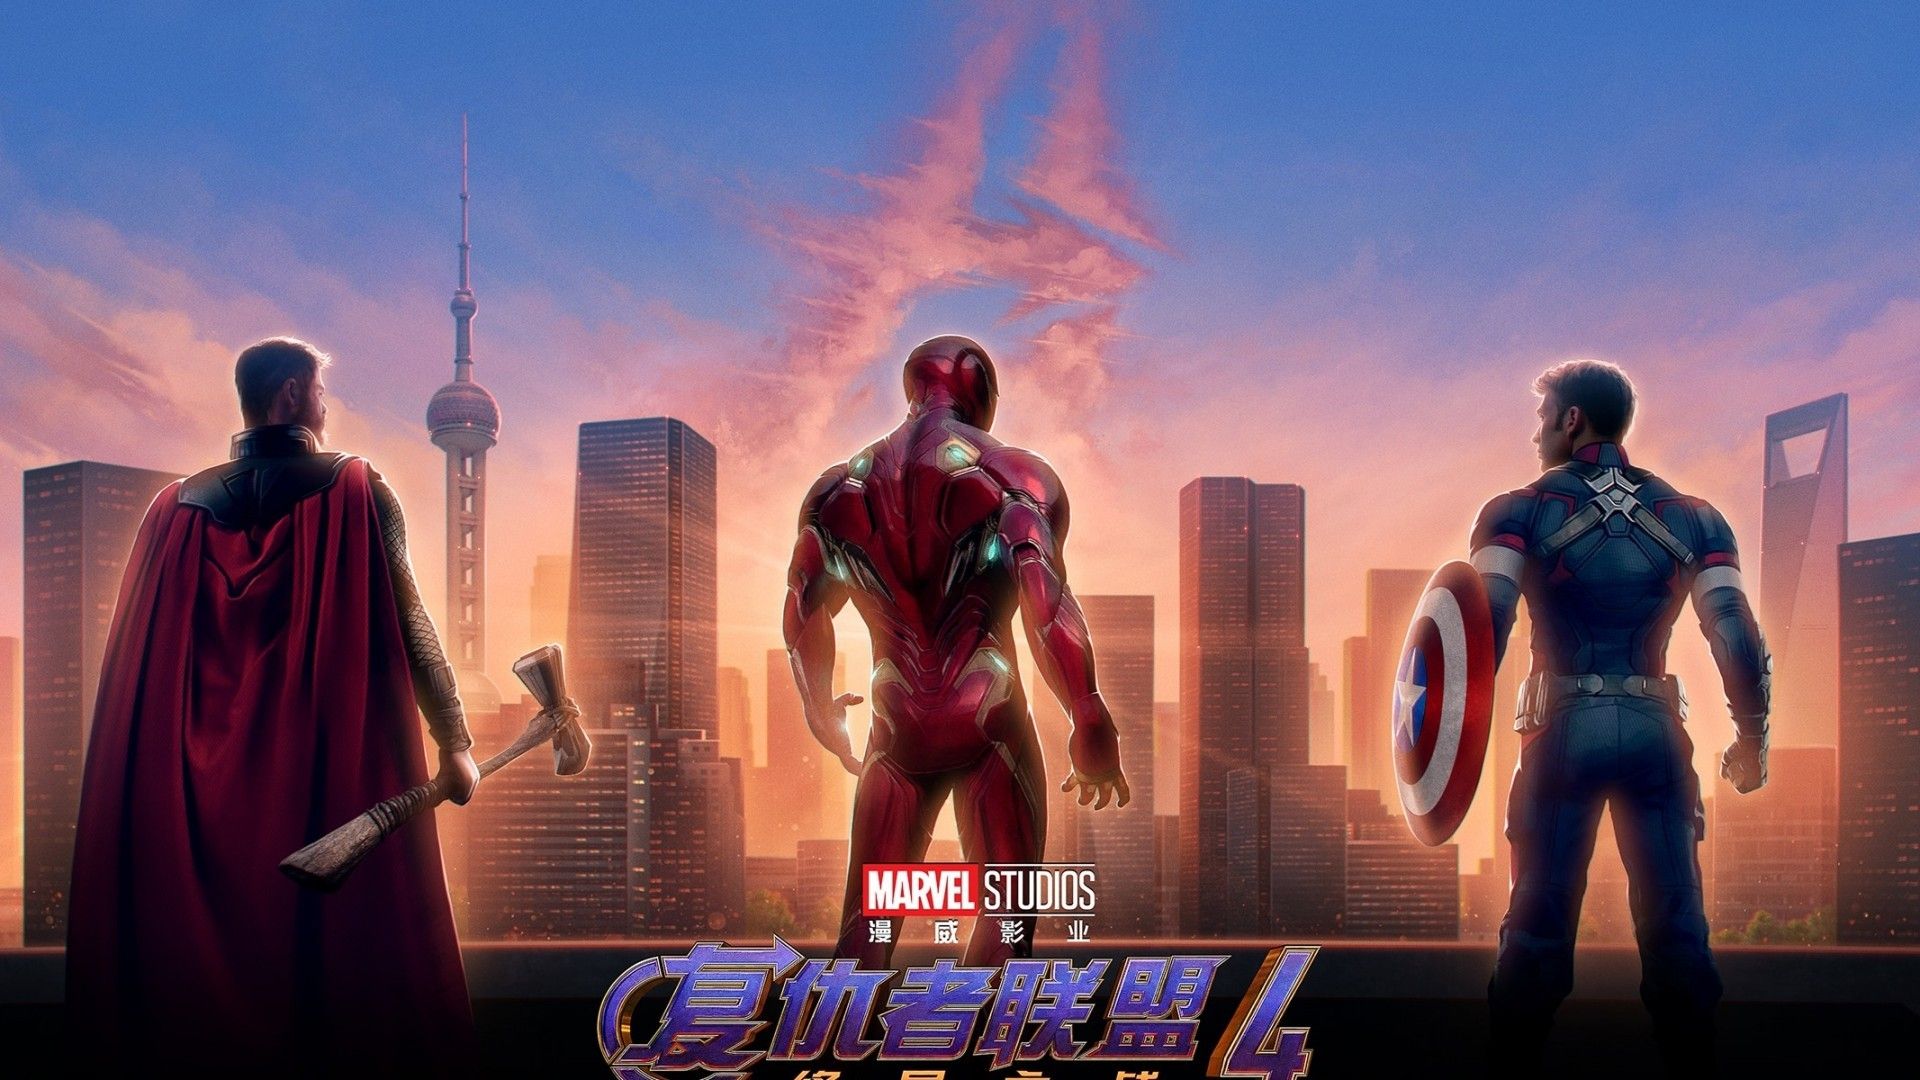 Download 1920x1080 Avengers: Endgame, Shanghai, Poster, Iron Man, Captain America, Thor Wallpaper for Widescreen